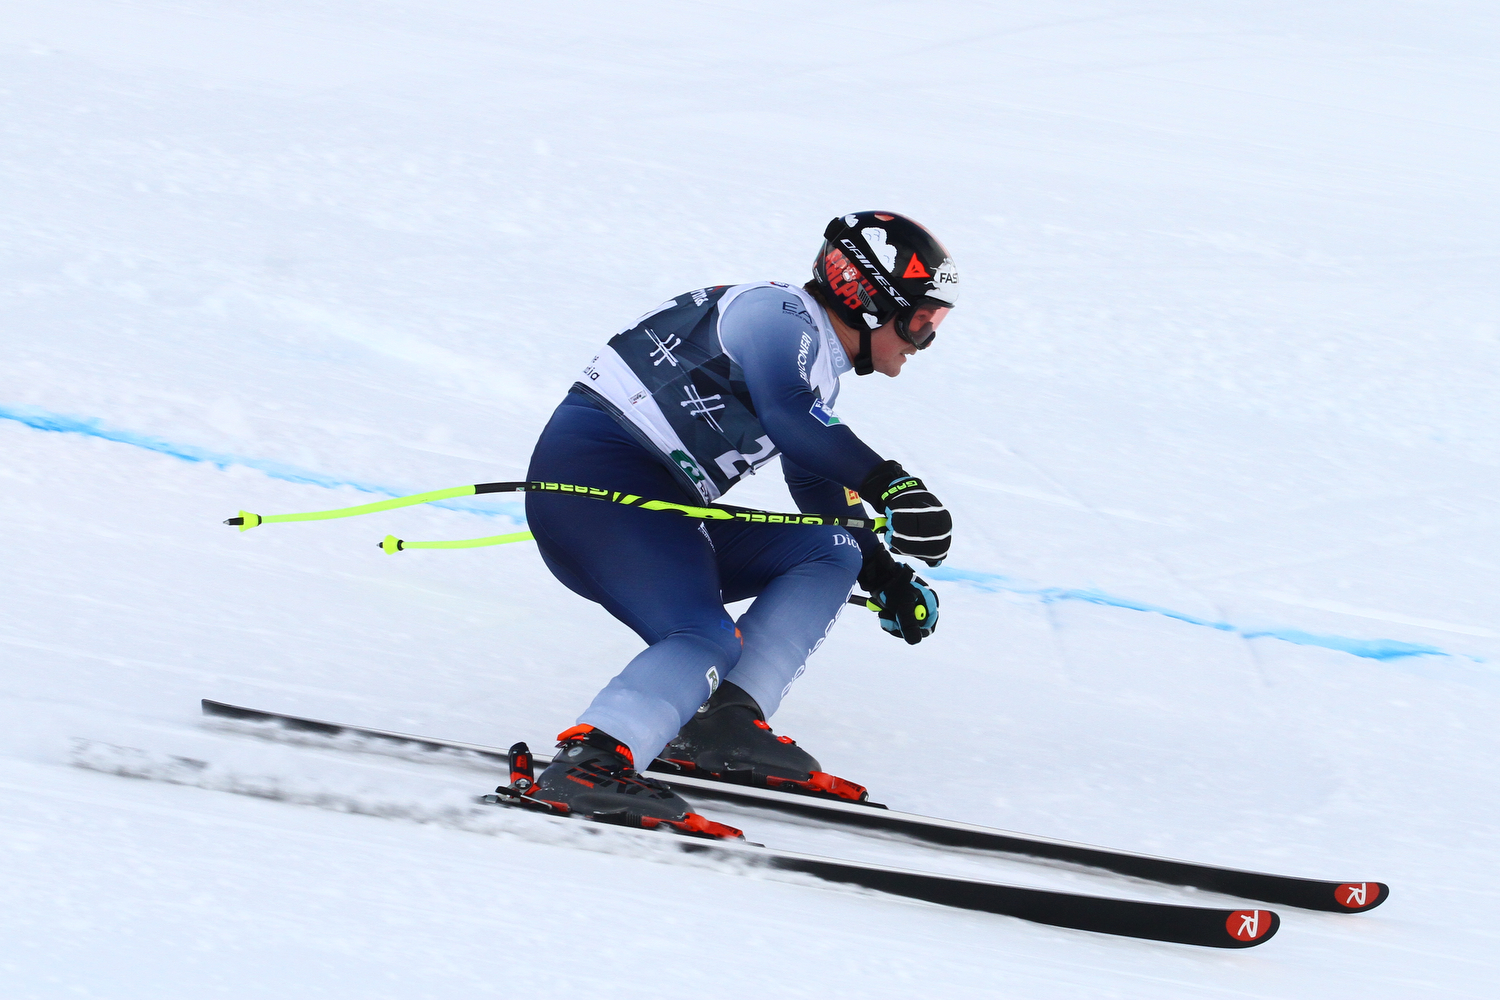 Fis Alpine Skiing Europa Cup, Santa Caterina Valfurva (ITA), 14/12/23, Gregorio Bernardi, photo credit: Acmediapress